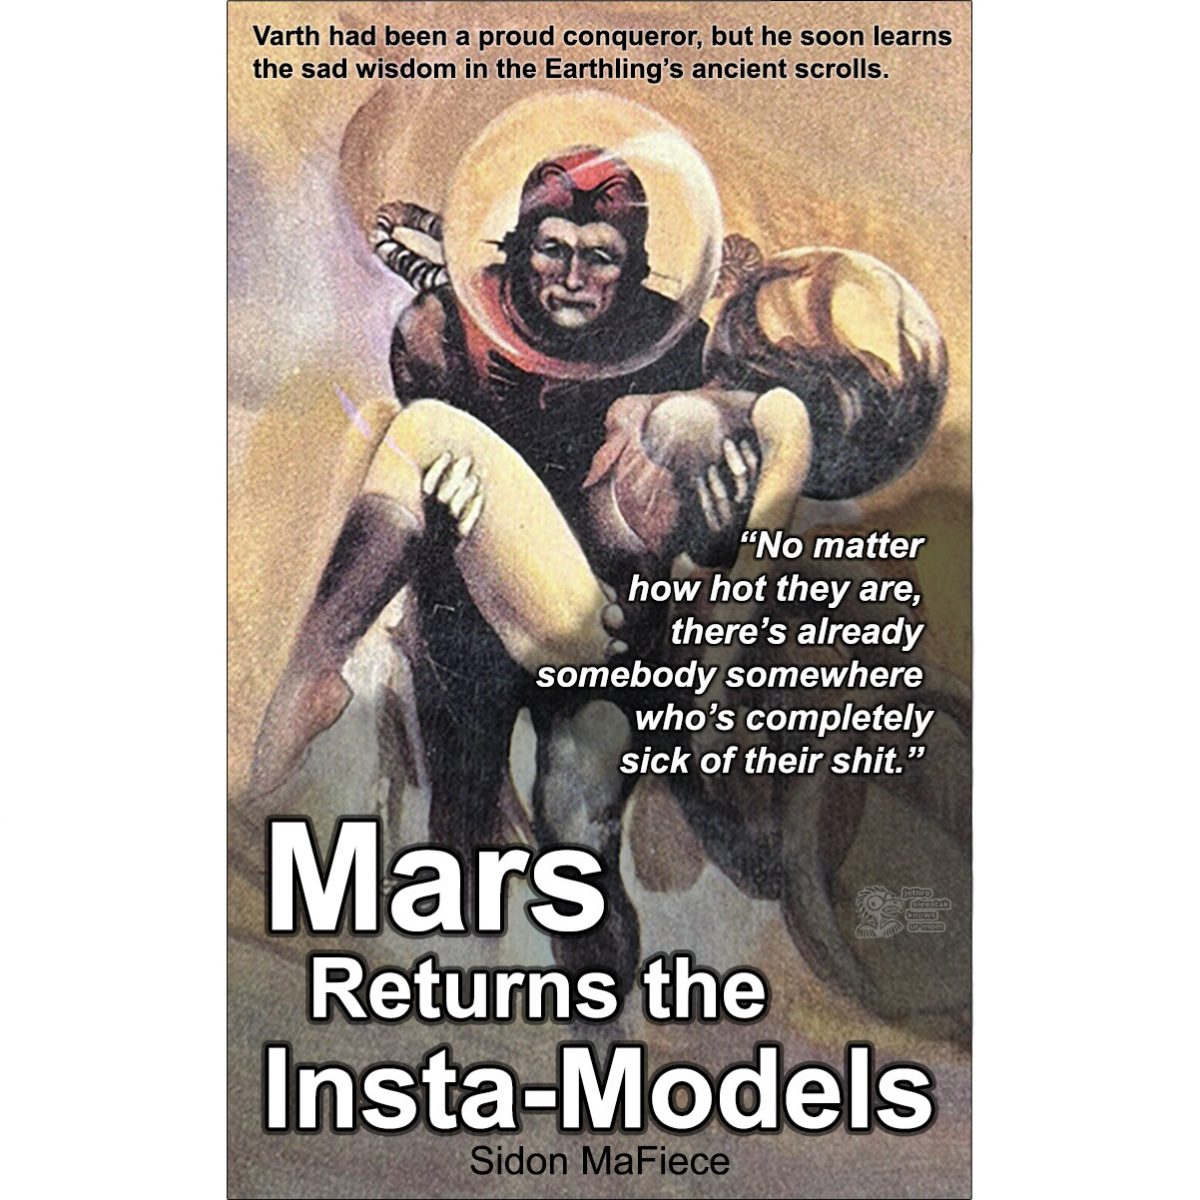 Mars Returns the Insta-Models